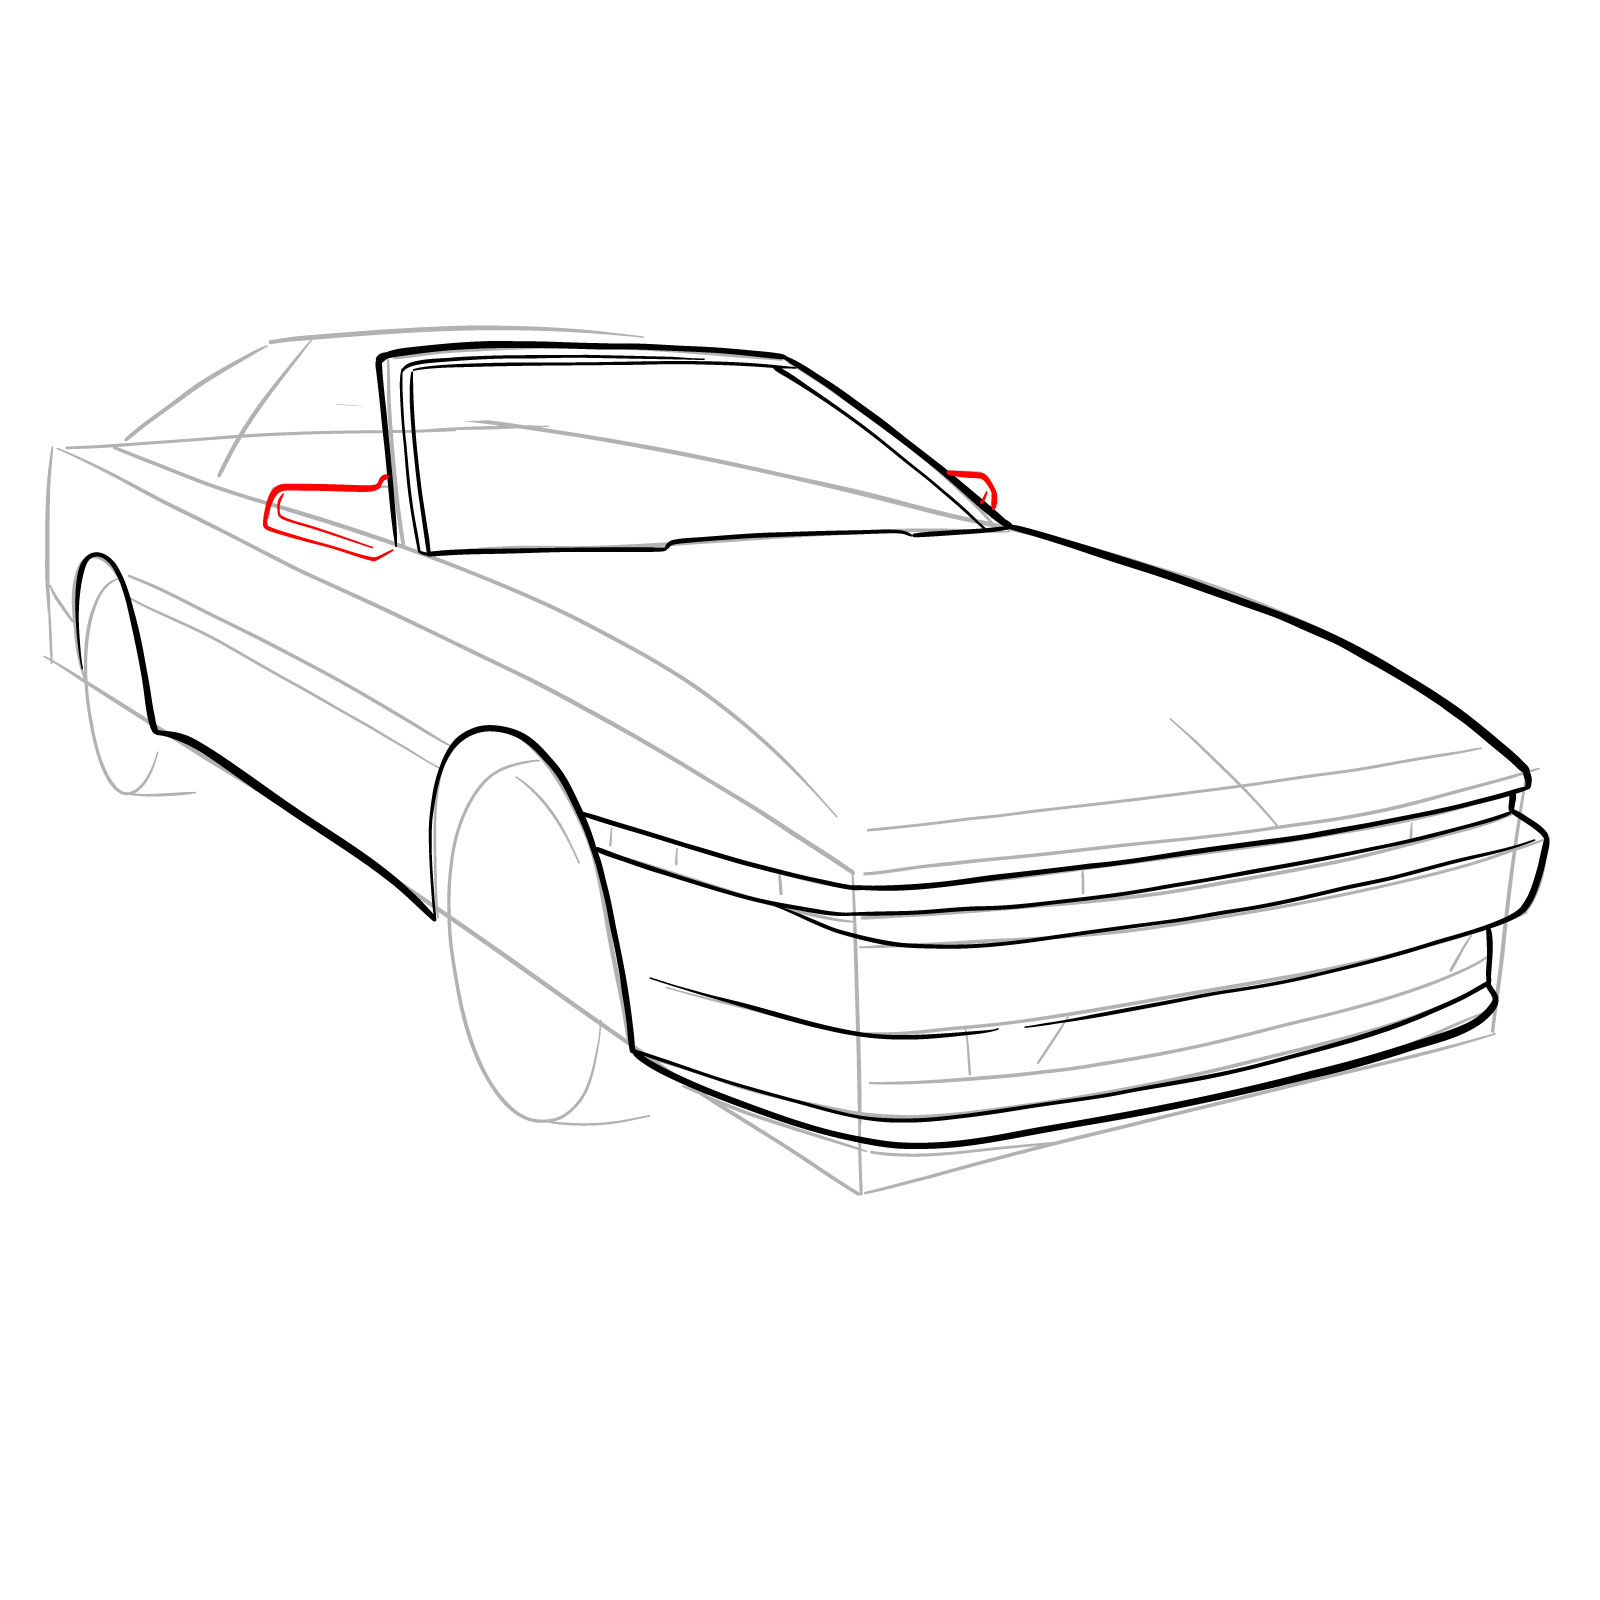 How to draw a 1988 Toyota Supra Turbo MK 3 - step 12